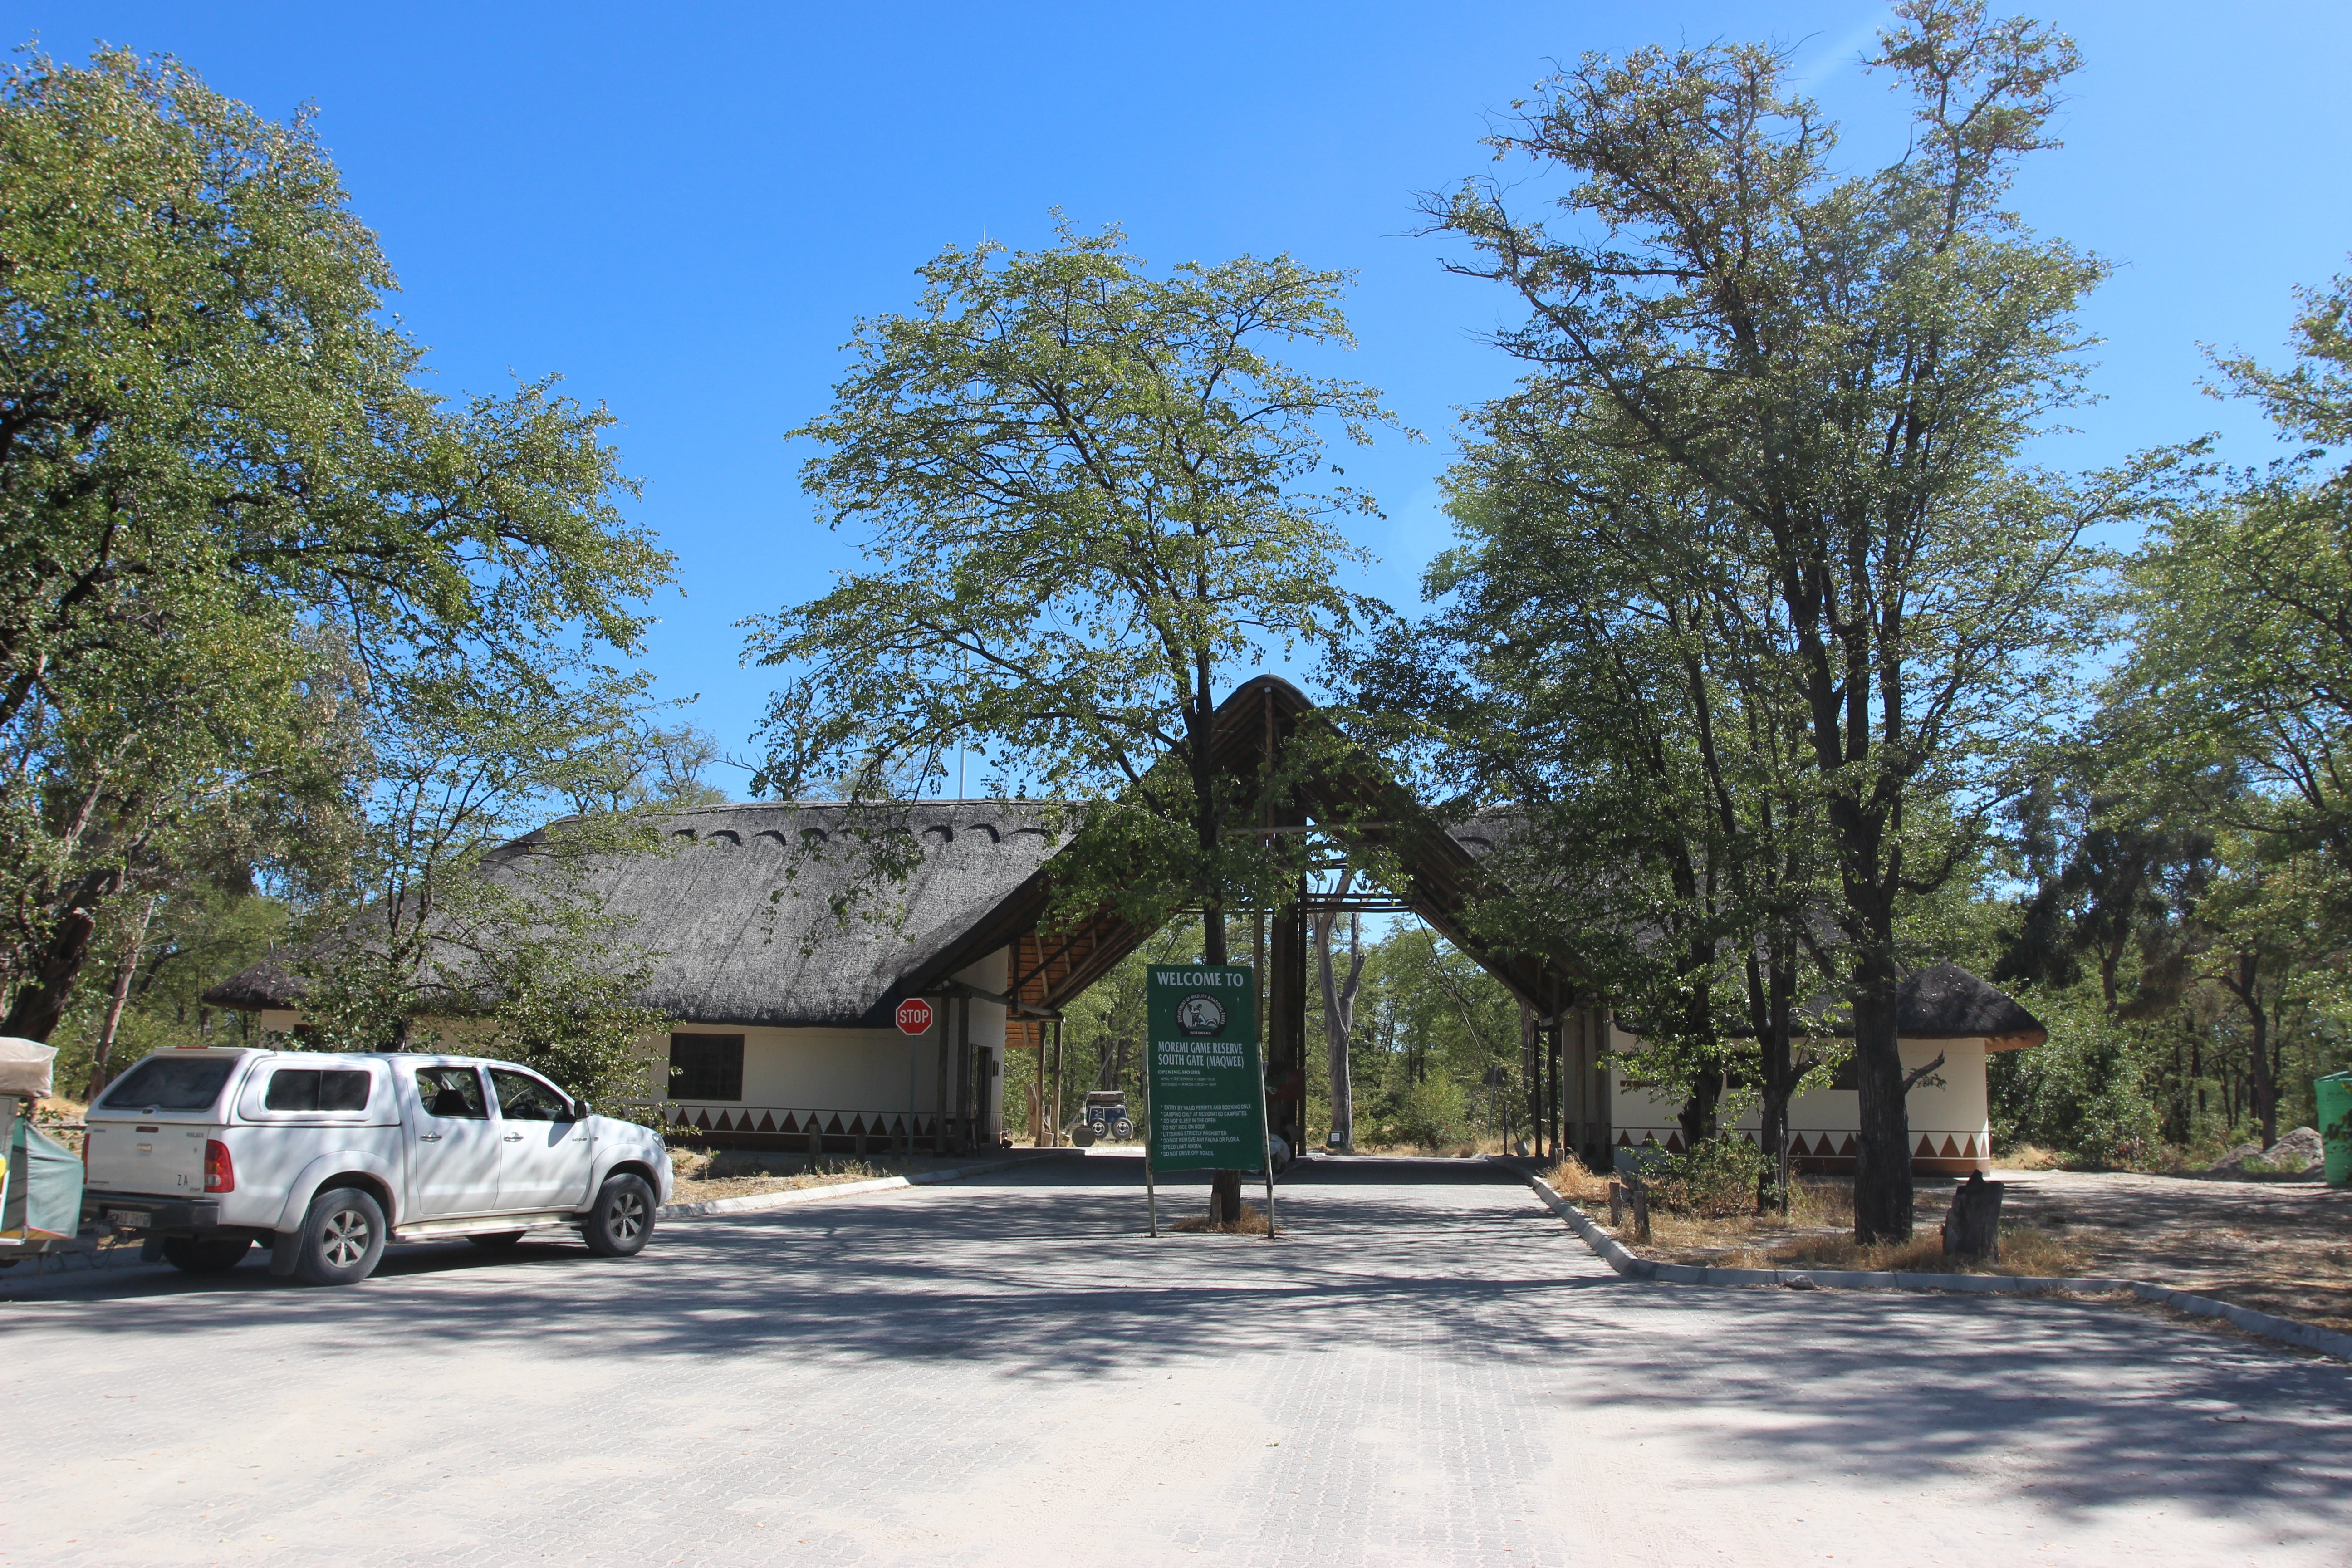 South Gate Campsite